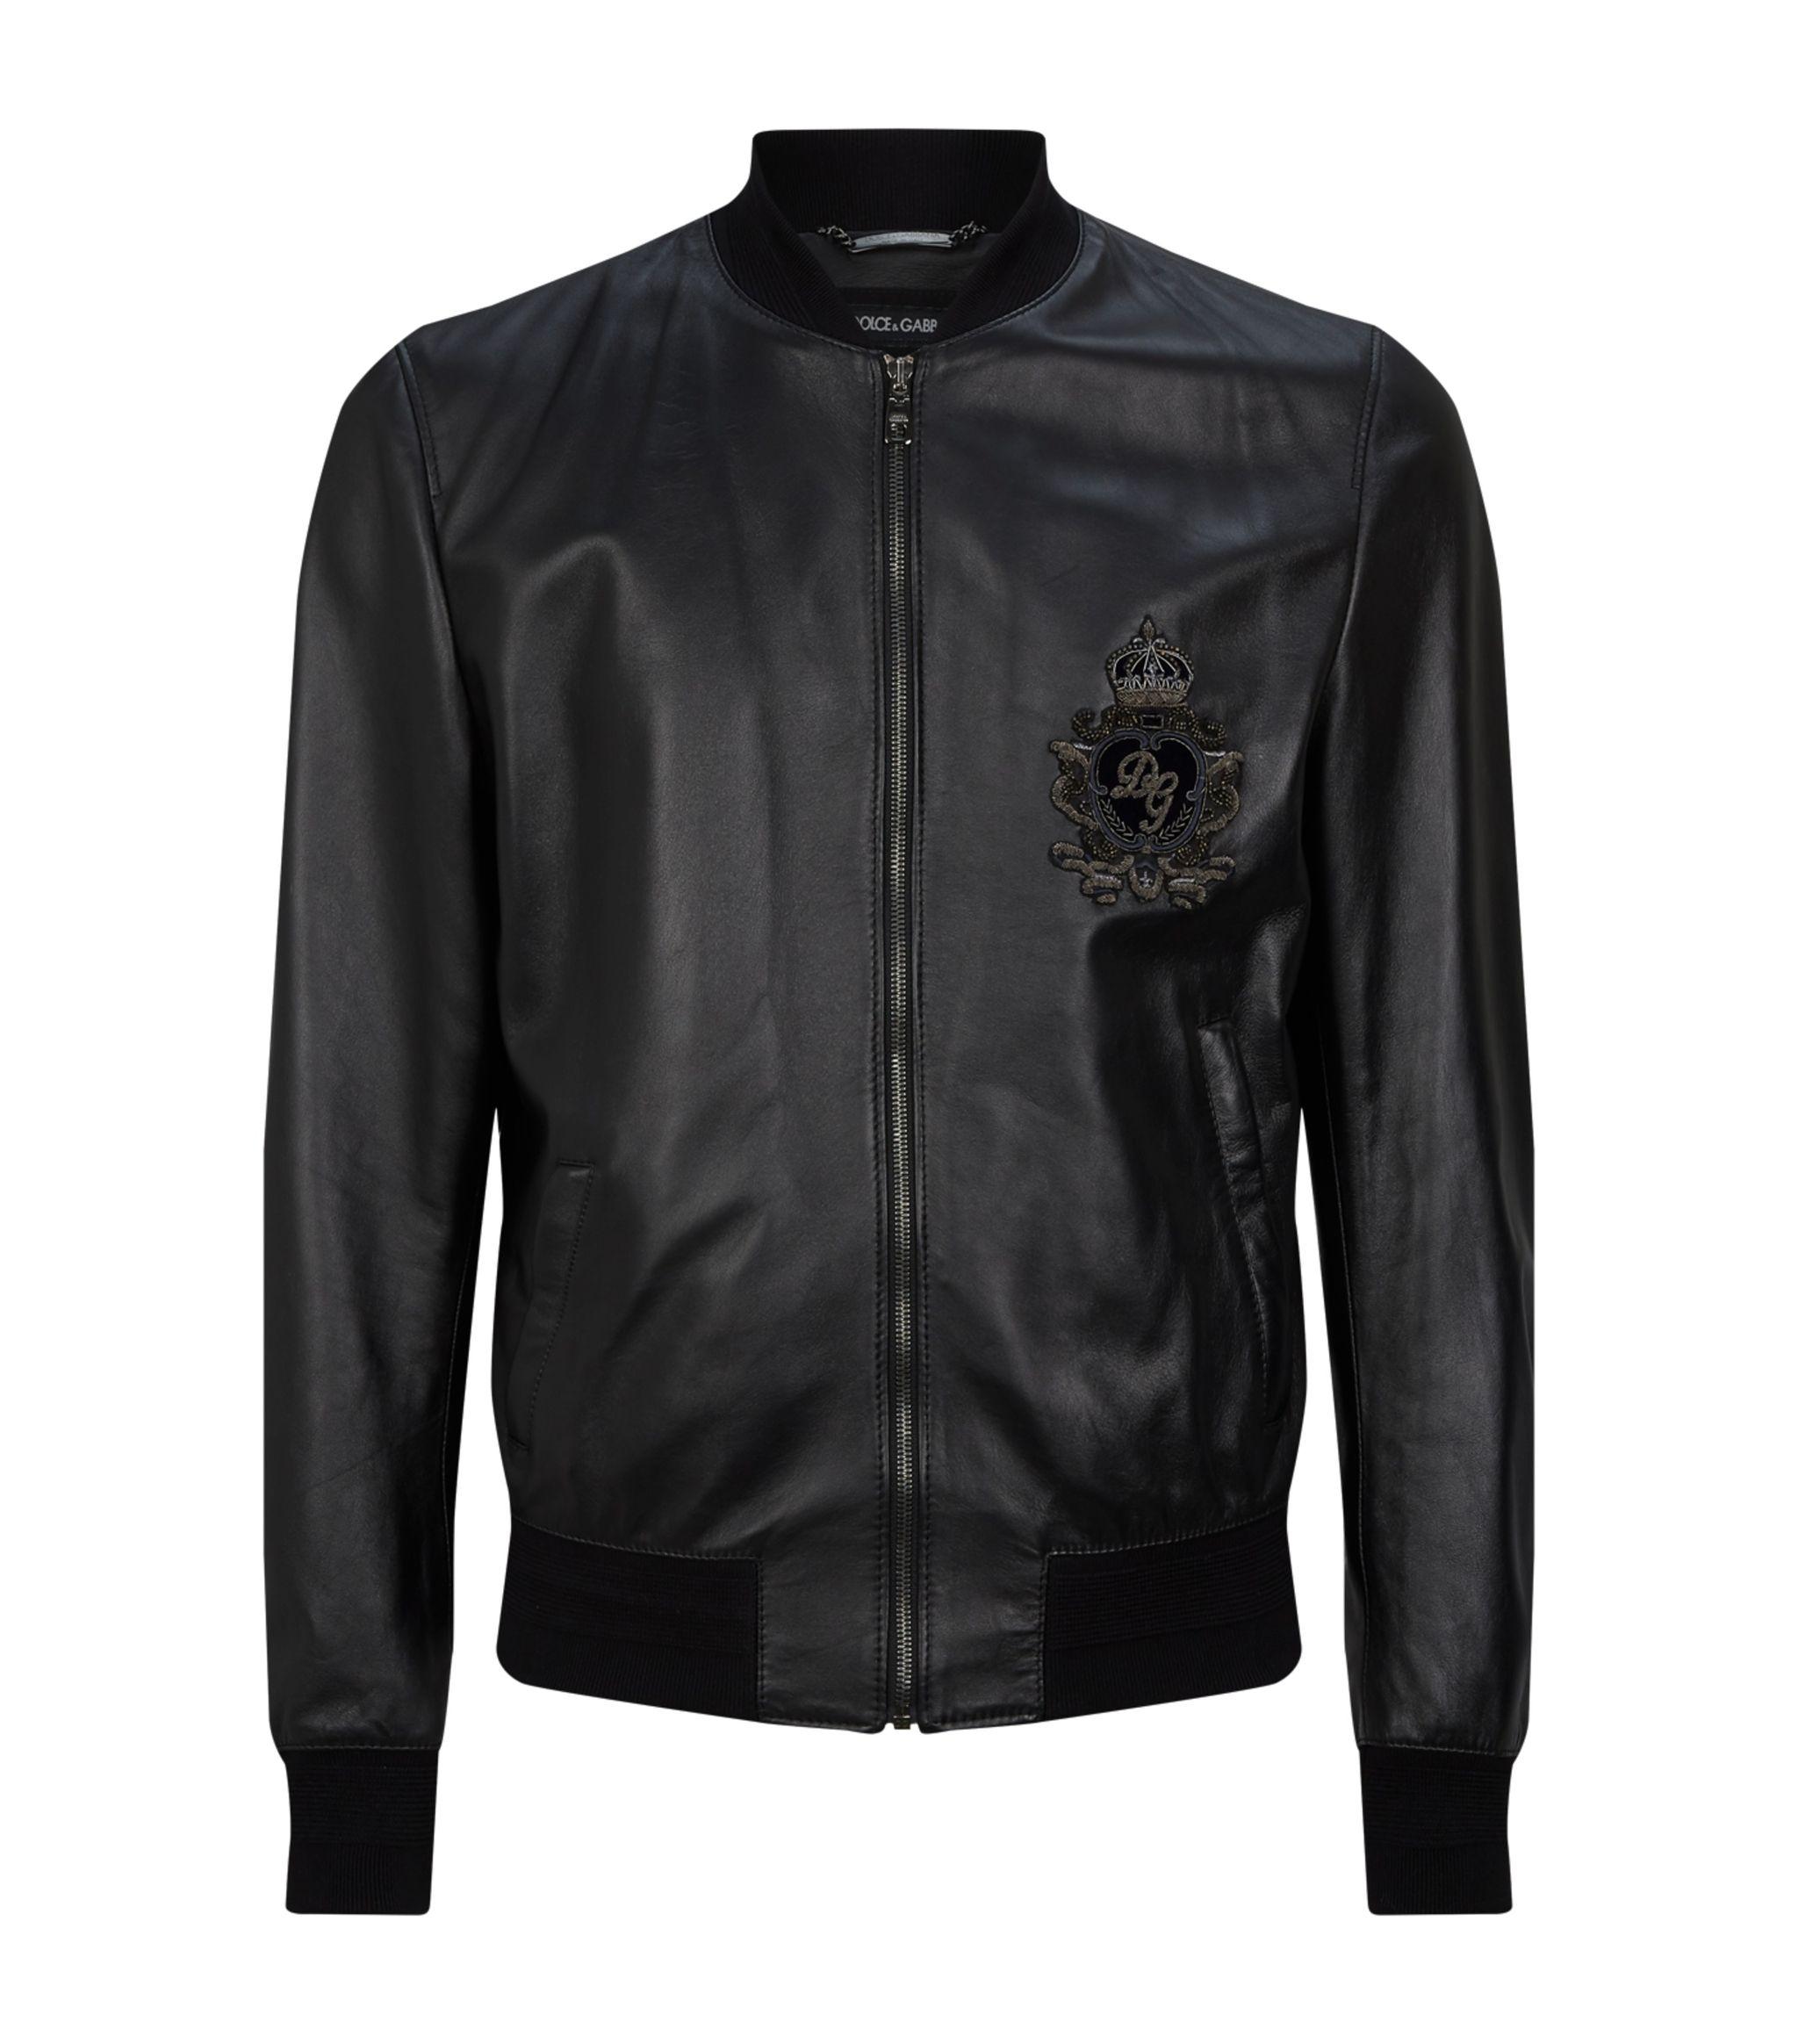 Dolce & Gabbana Logo Leather Jacket in Black for Men - Lyst